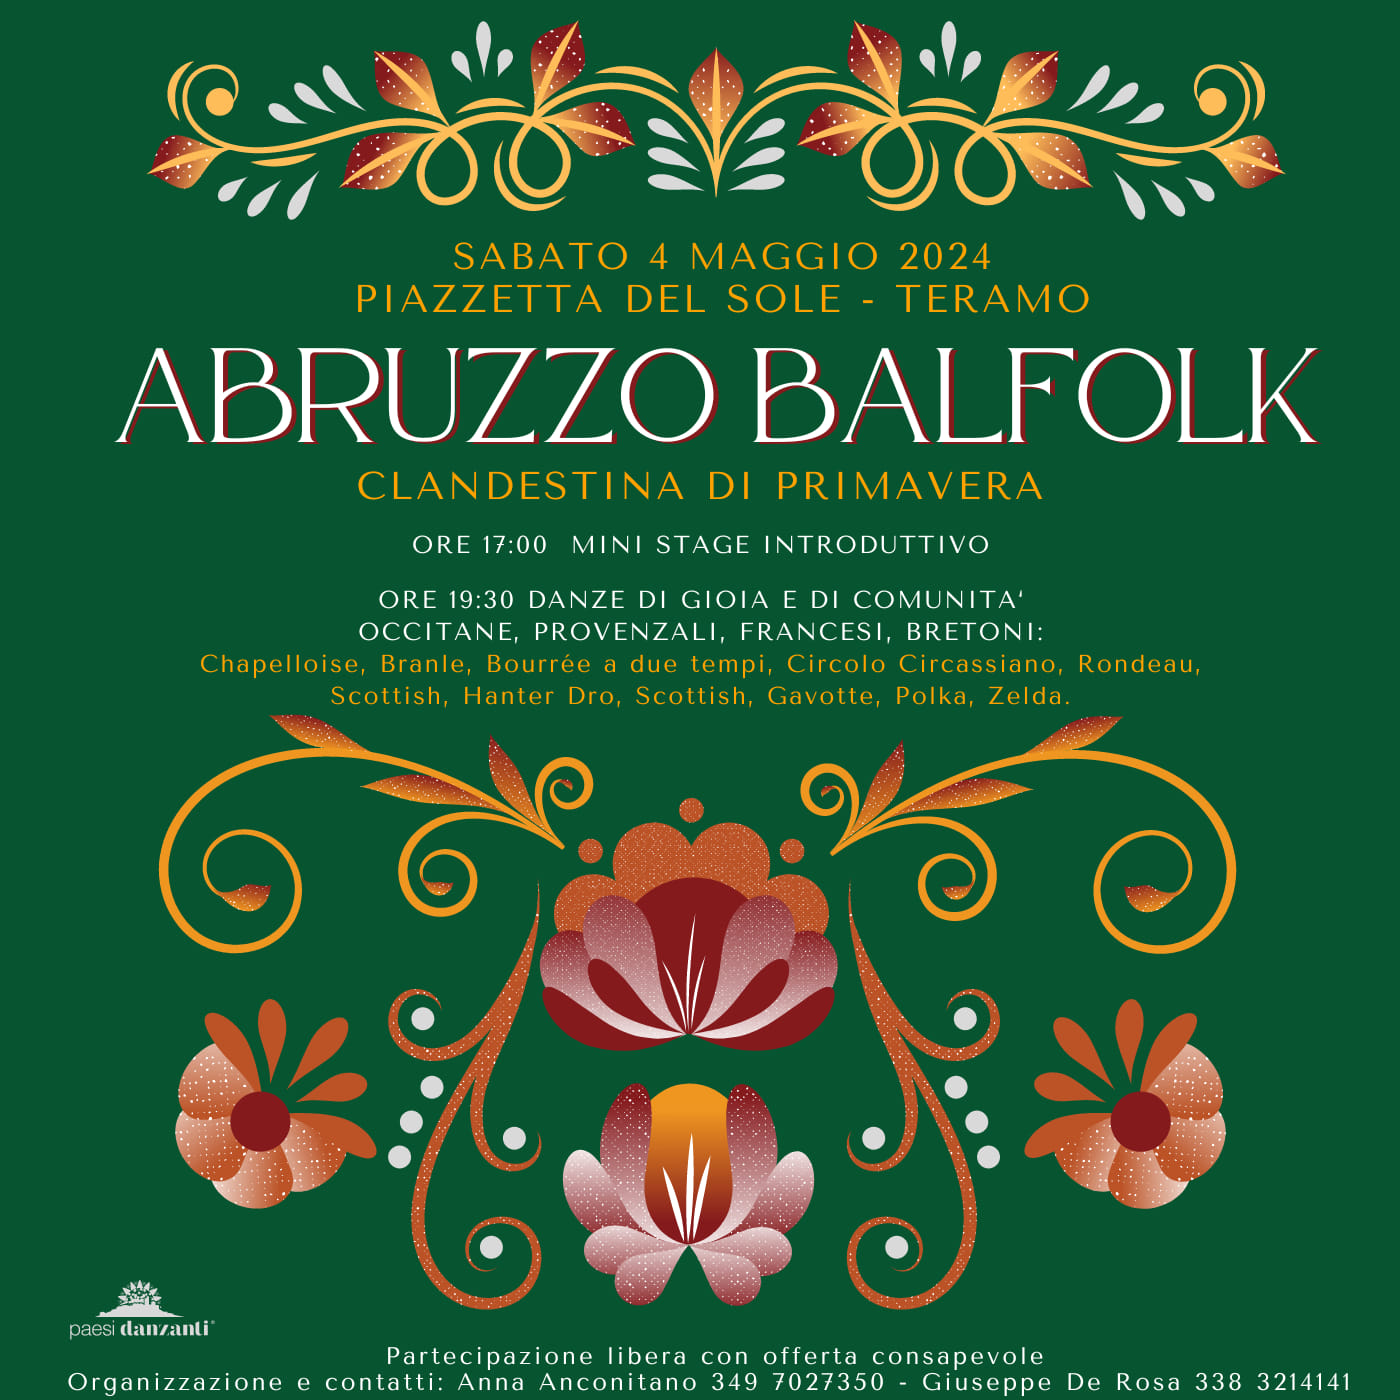 Abruzzo Balfolk